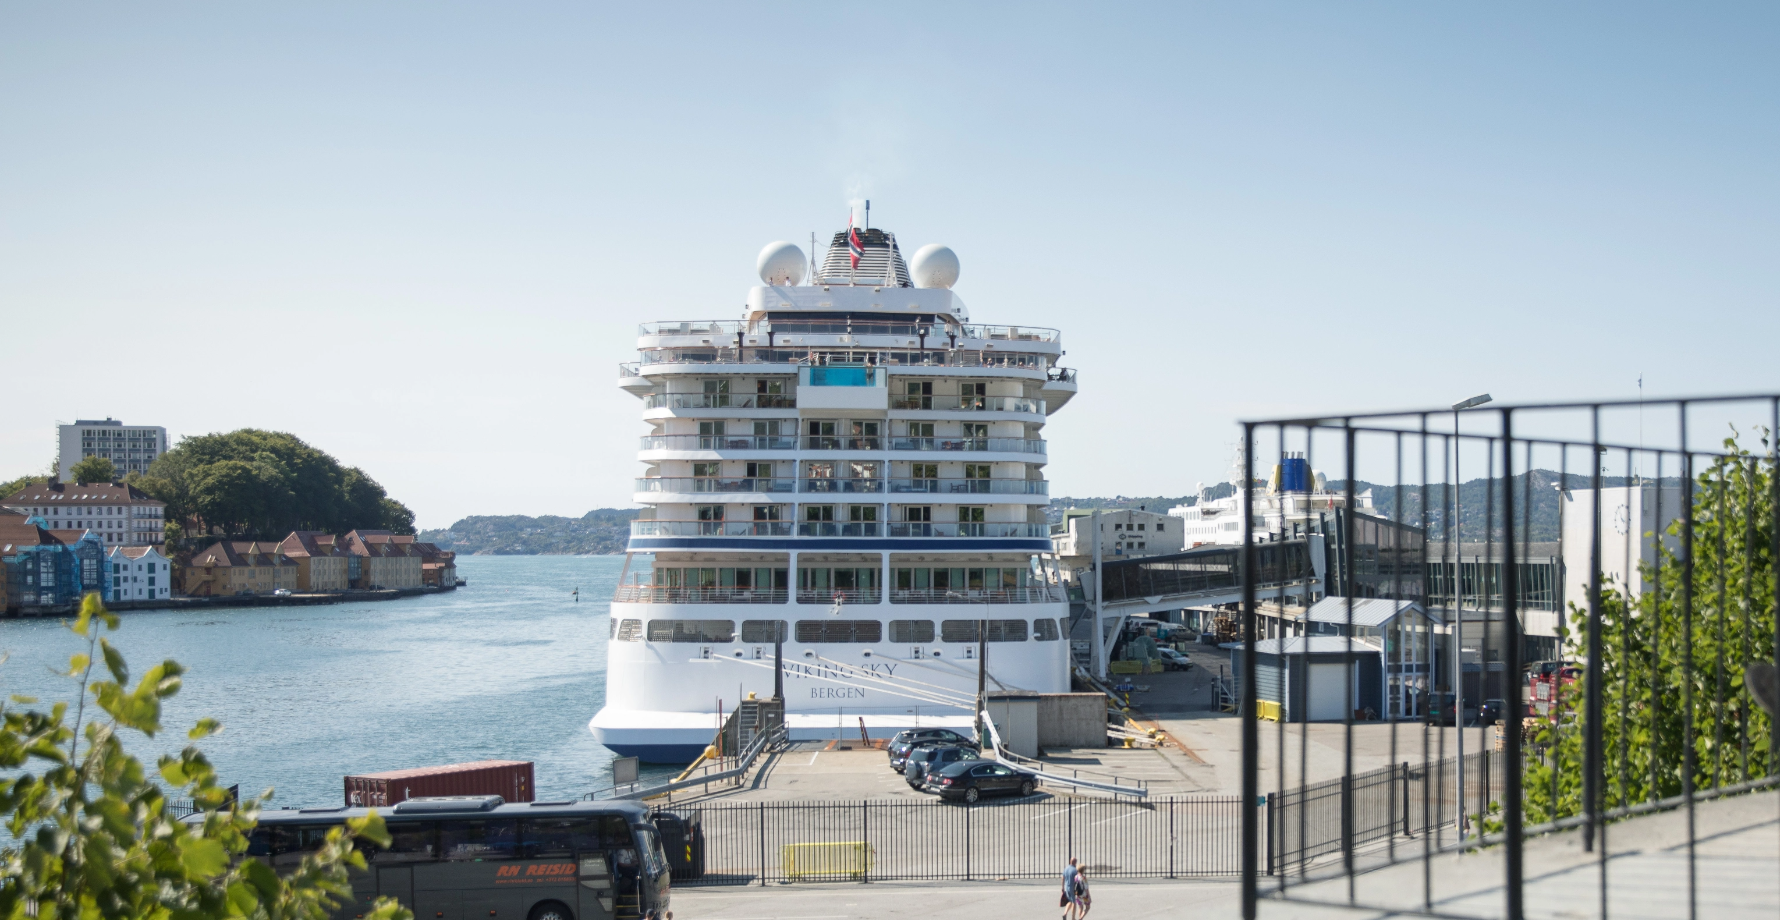 A sustainable cruiseport